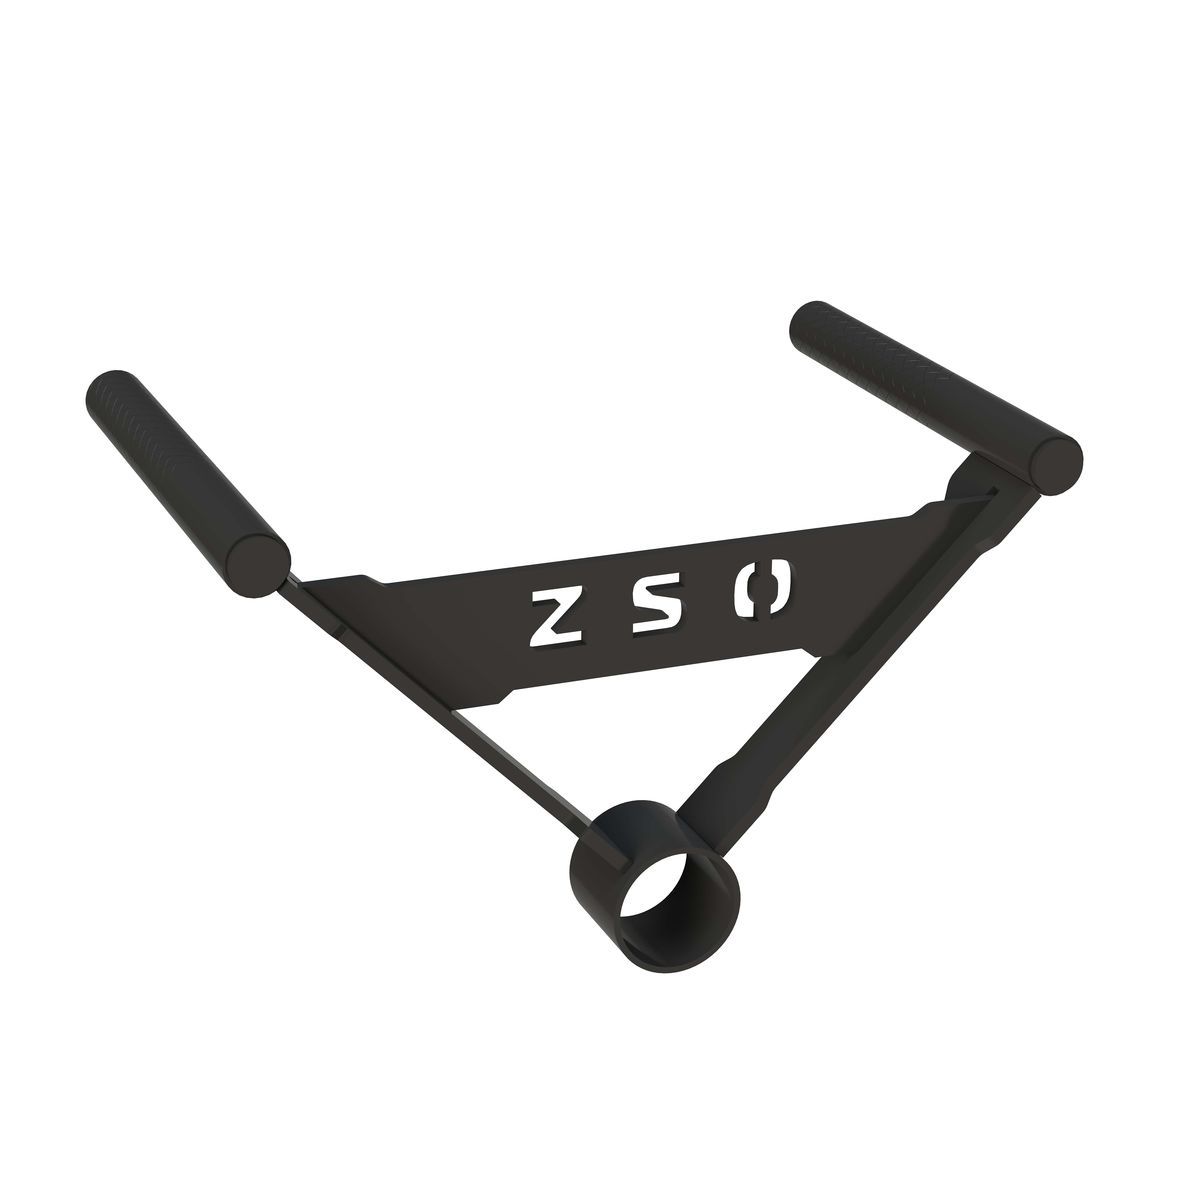 Тяга грифа - ручки узкий хват, ZSO-6001